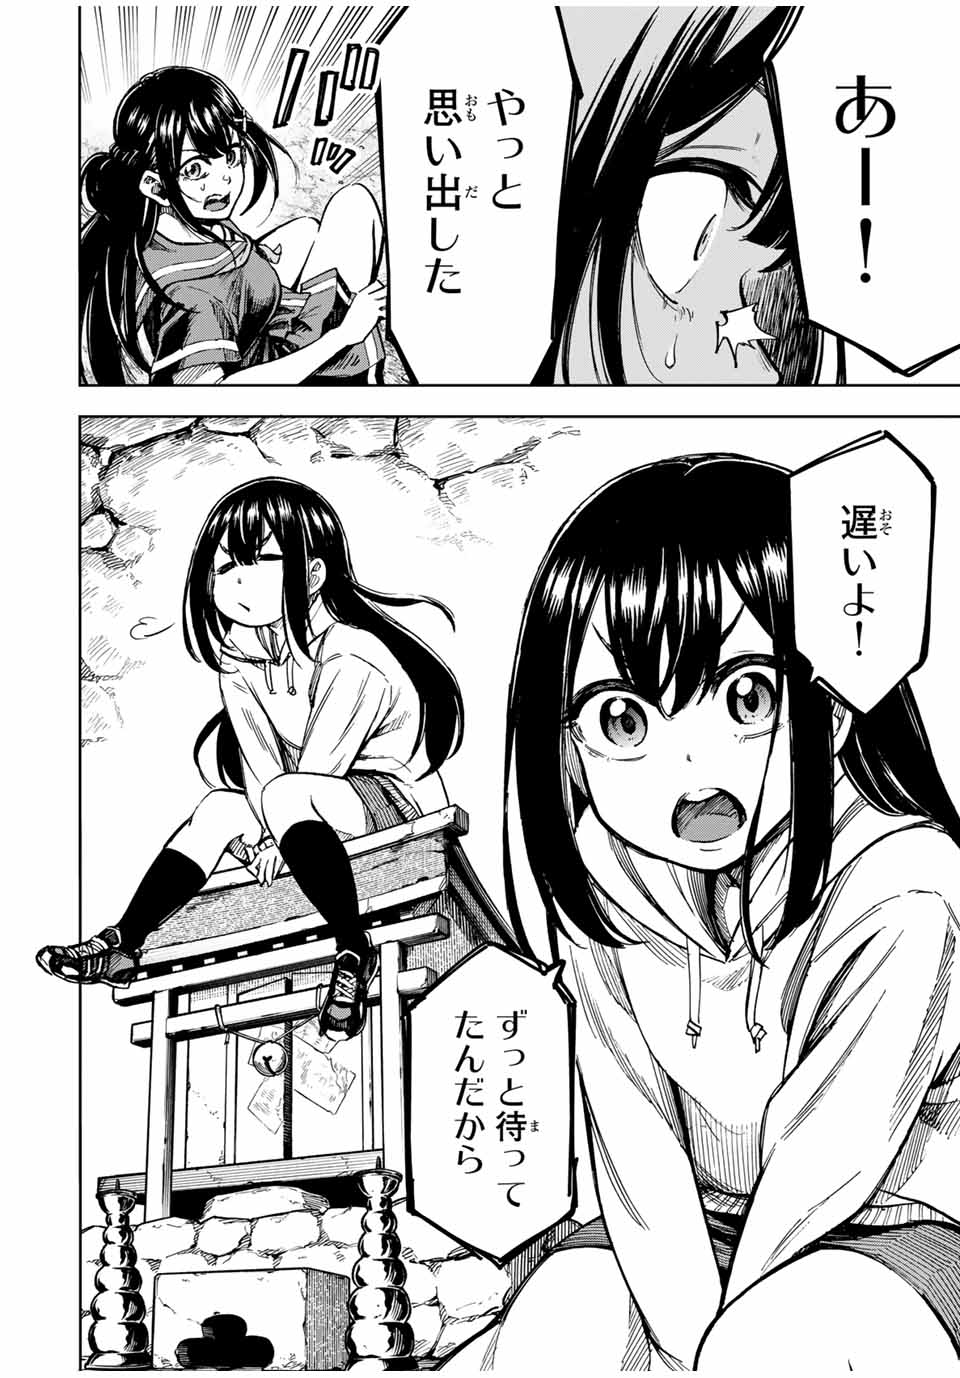 Kaminagashijima – Rinne no Miko - Chapter 30 - Page 2